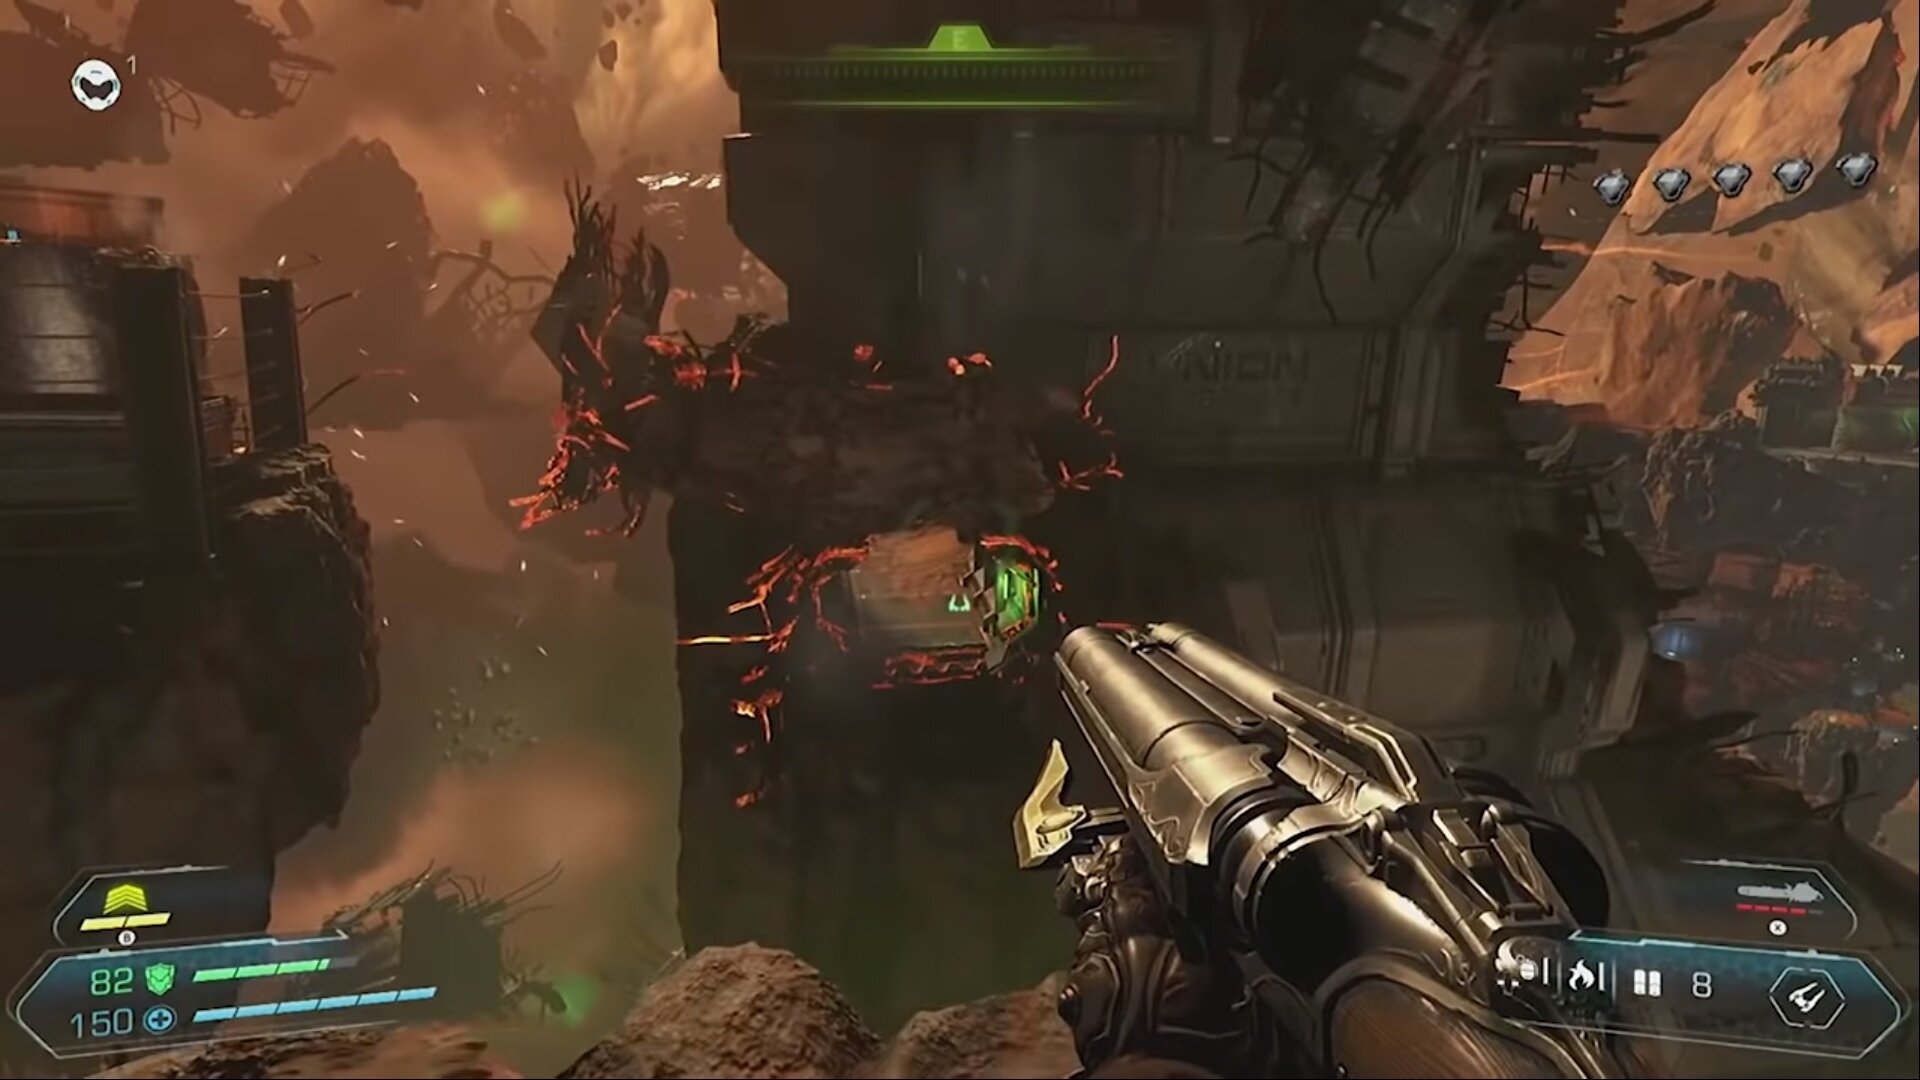 A glimpse of Doom Eternal's gameplay.